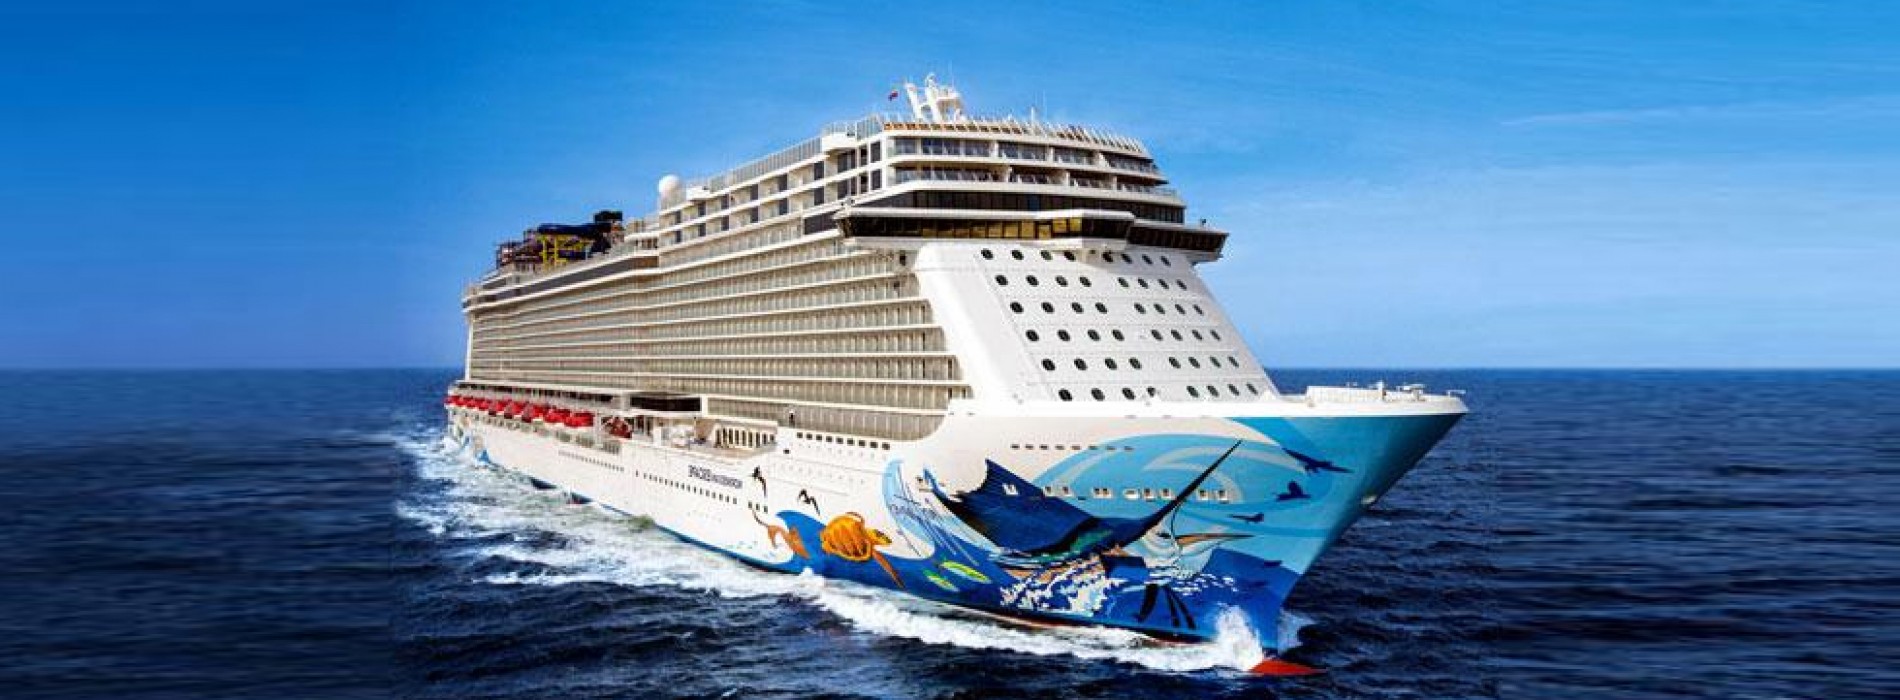 Largest Asian cruise ship starts maiden voyage